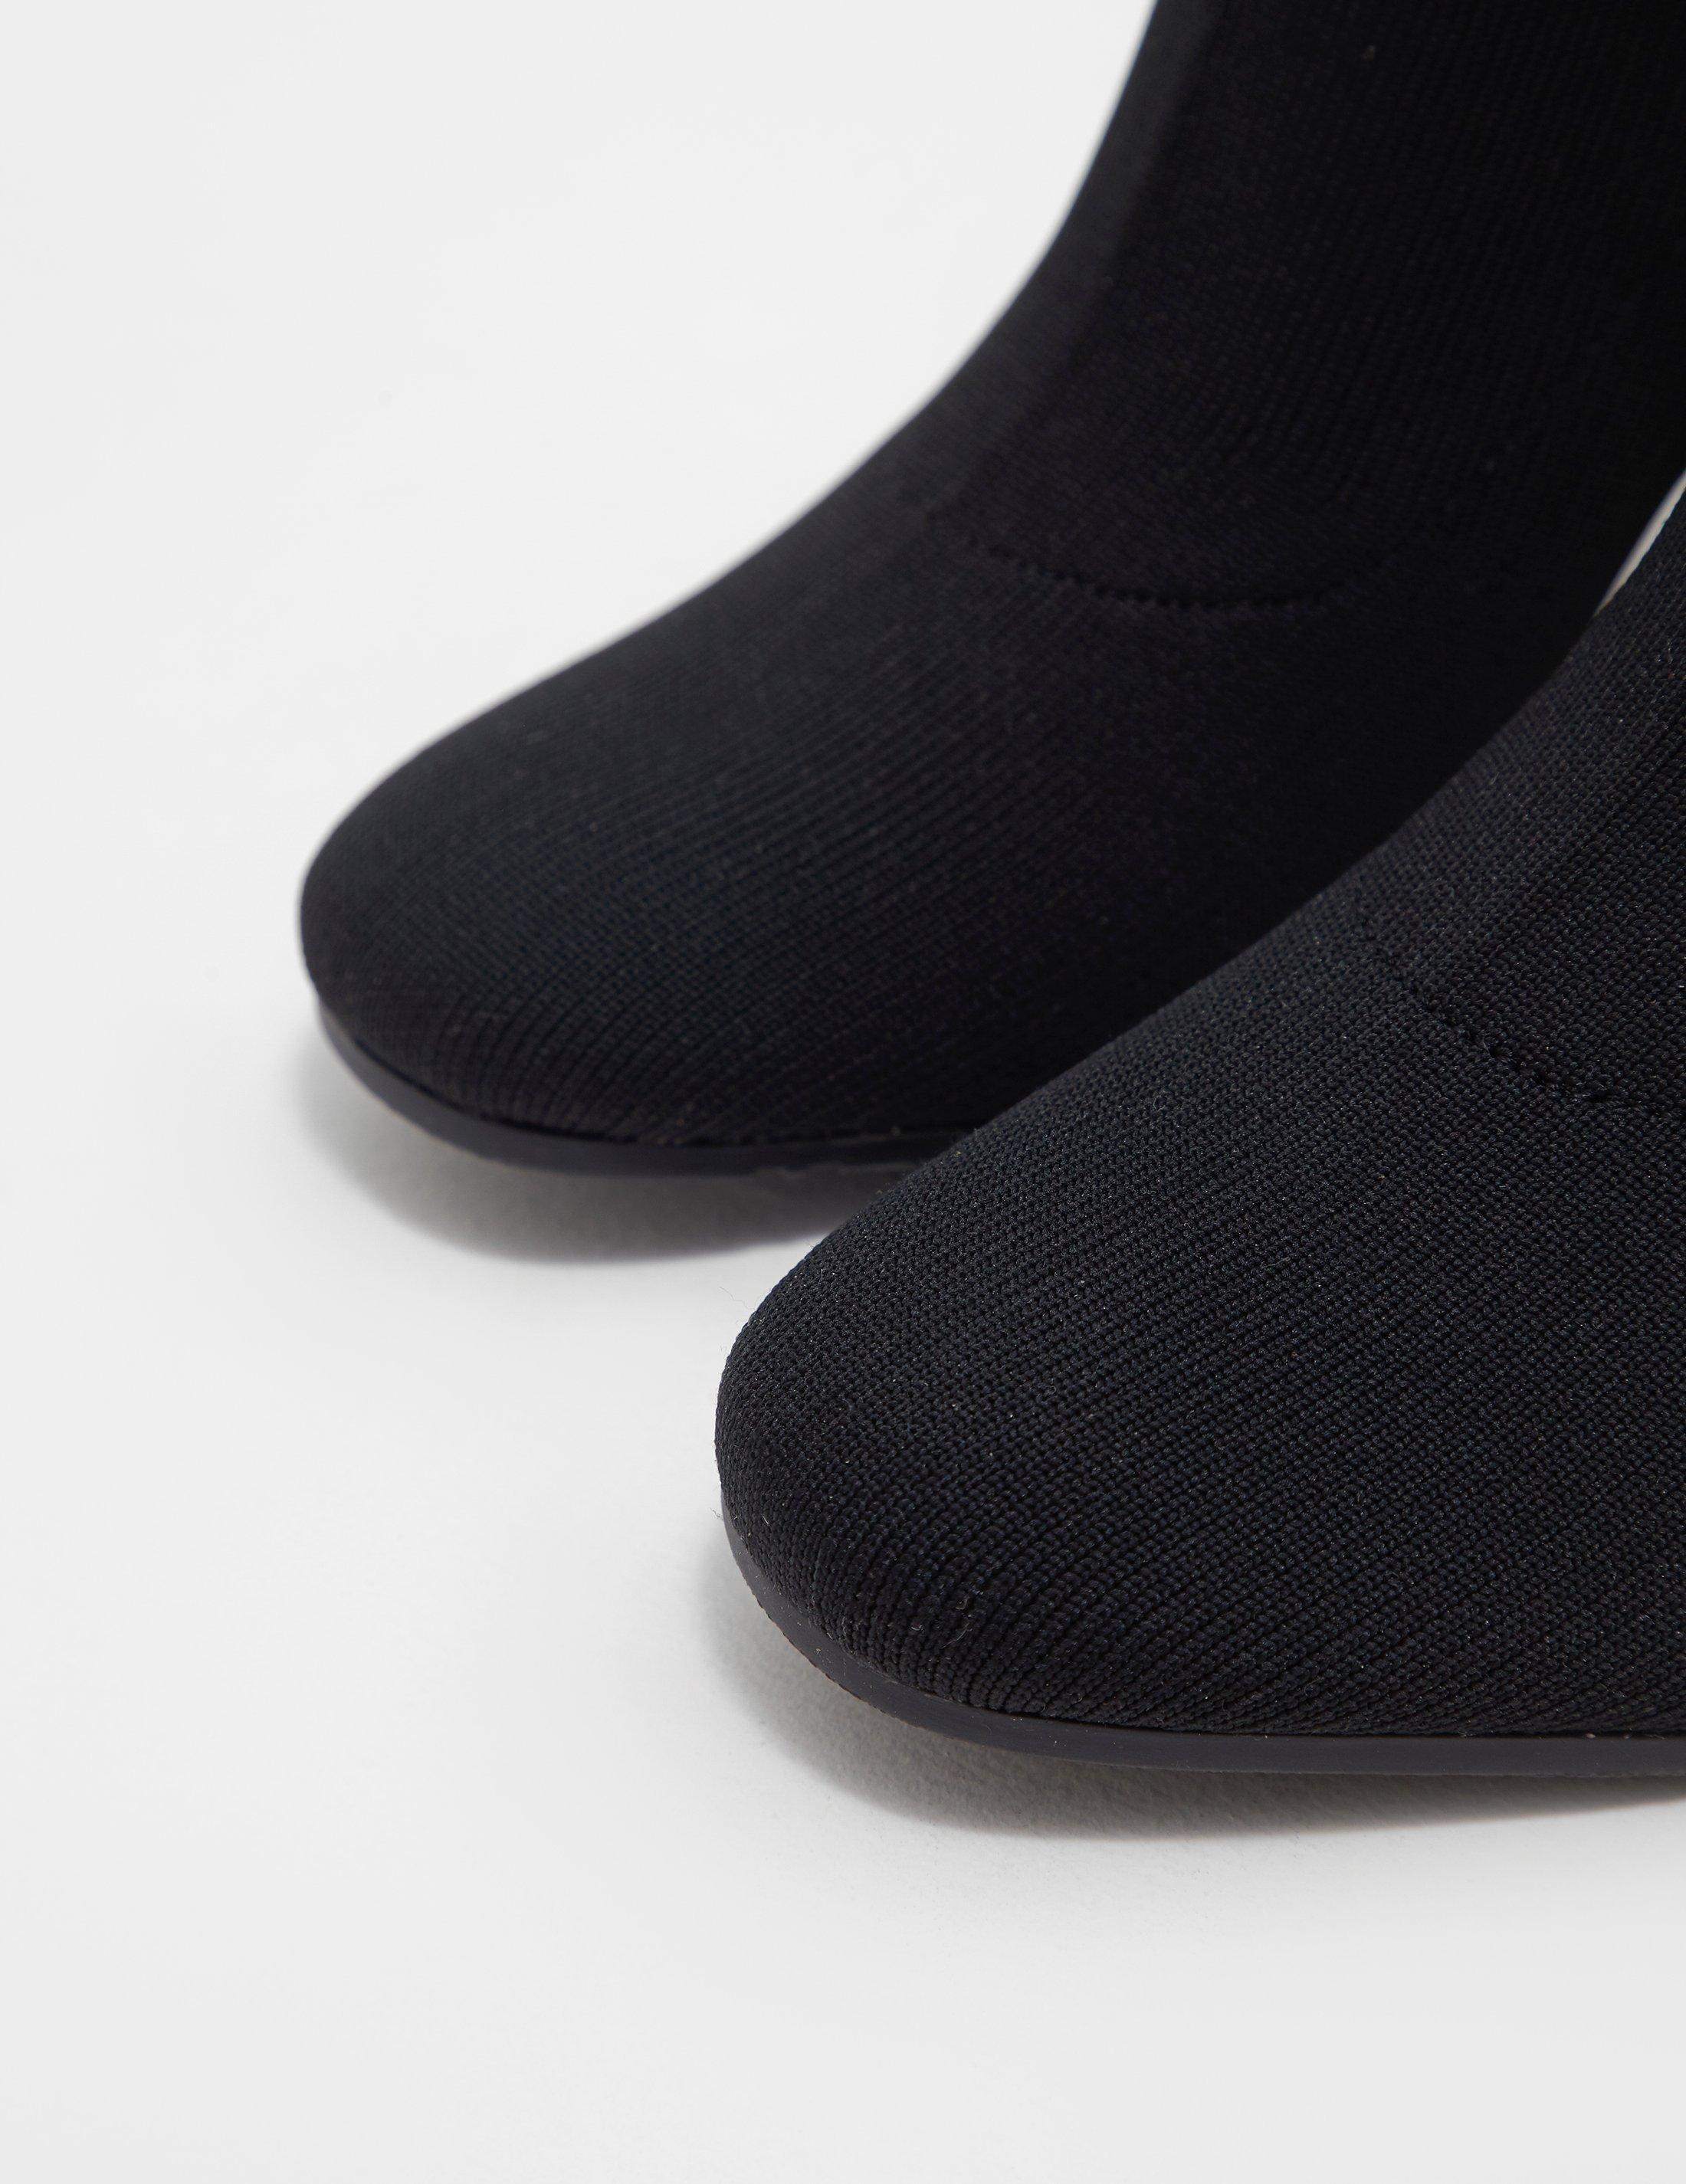 Tommy Hilfiger Denim Womens Sock Heeled Boots Black | Lyst